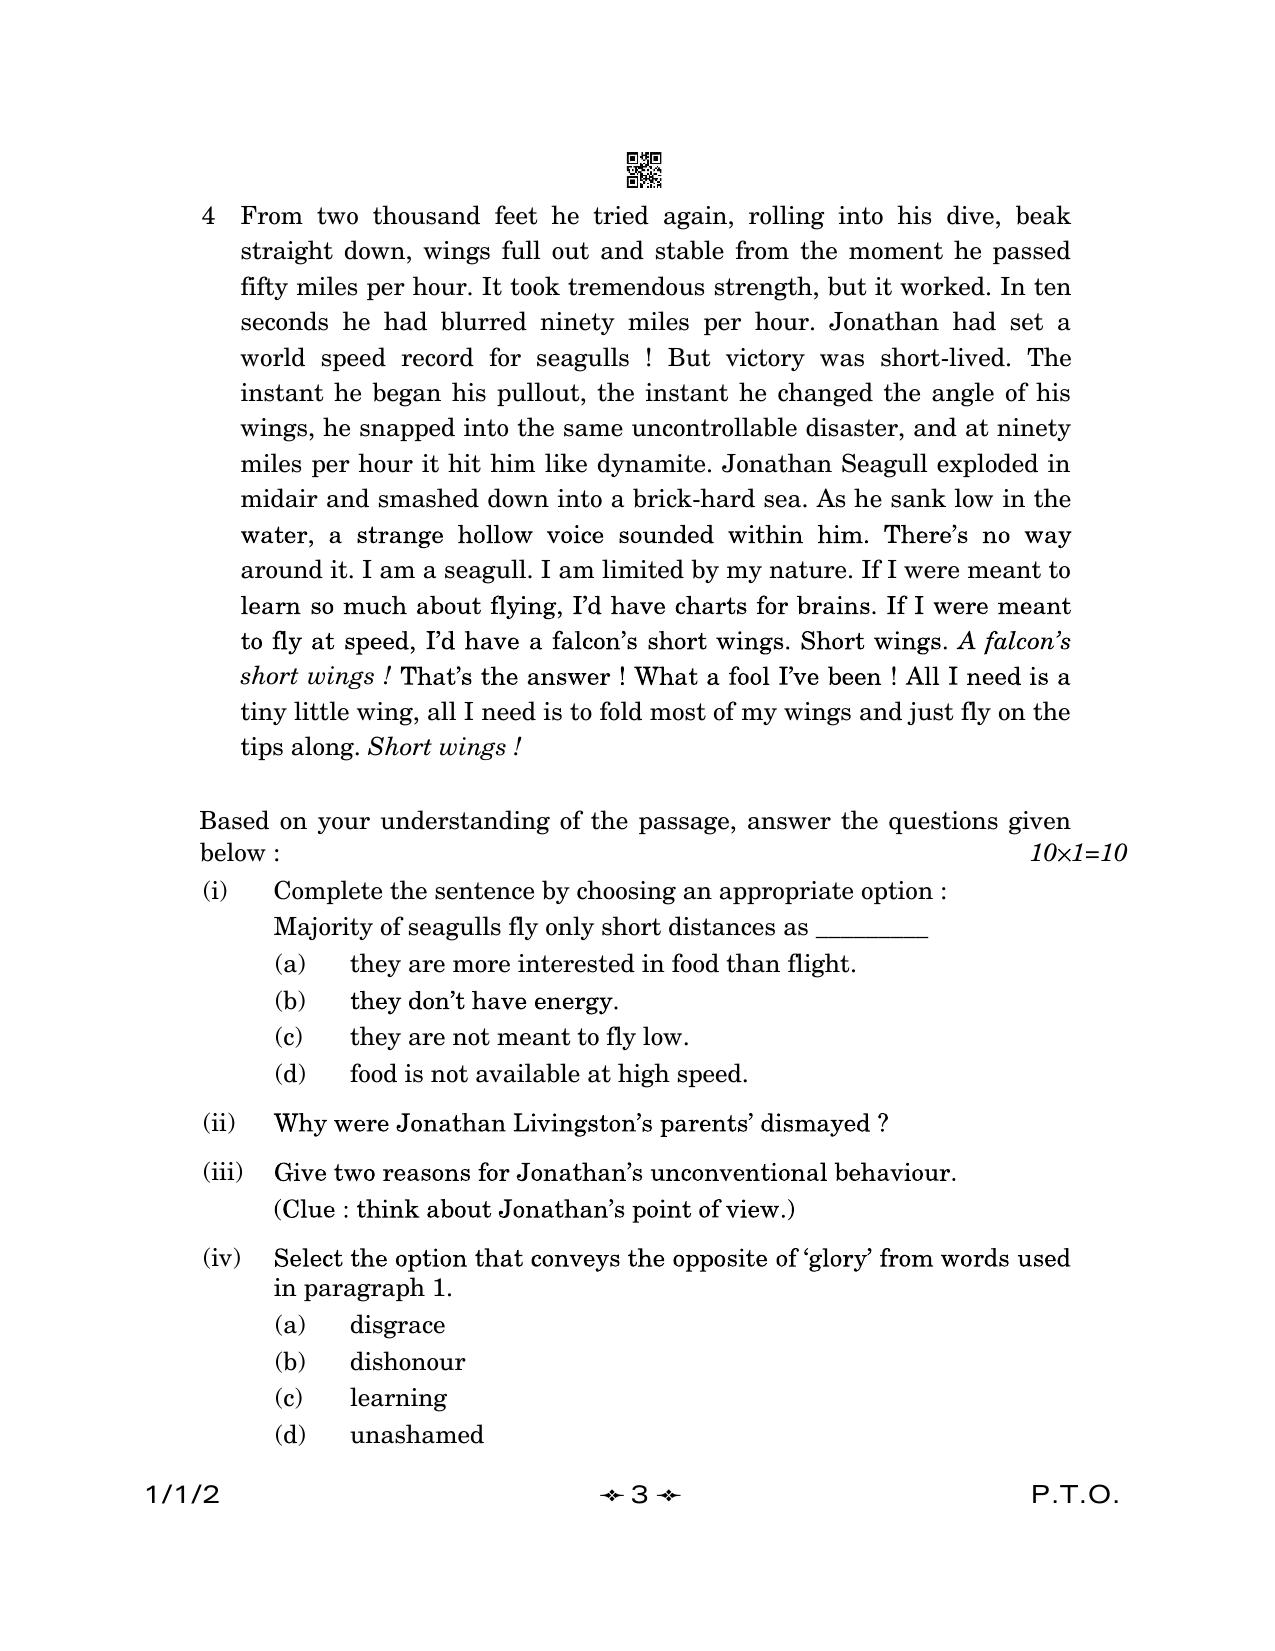 CBSE Class 12 1-1-2 English Core 2023 Question Paper - Page 3